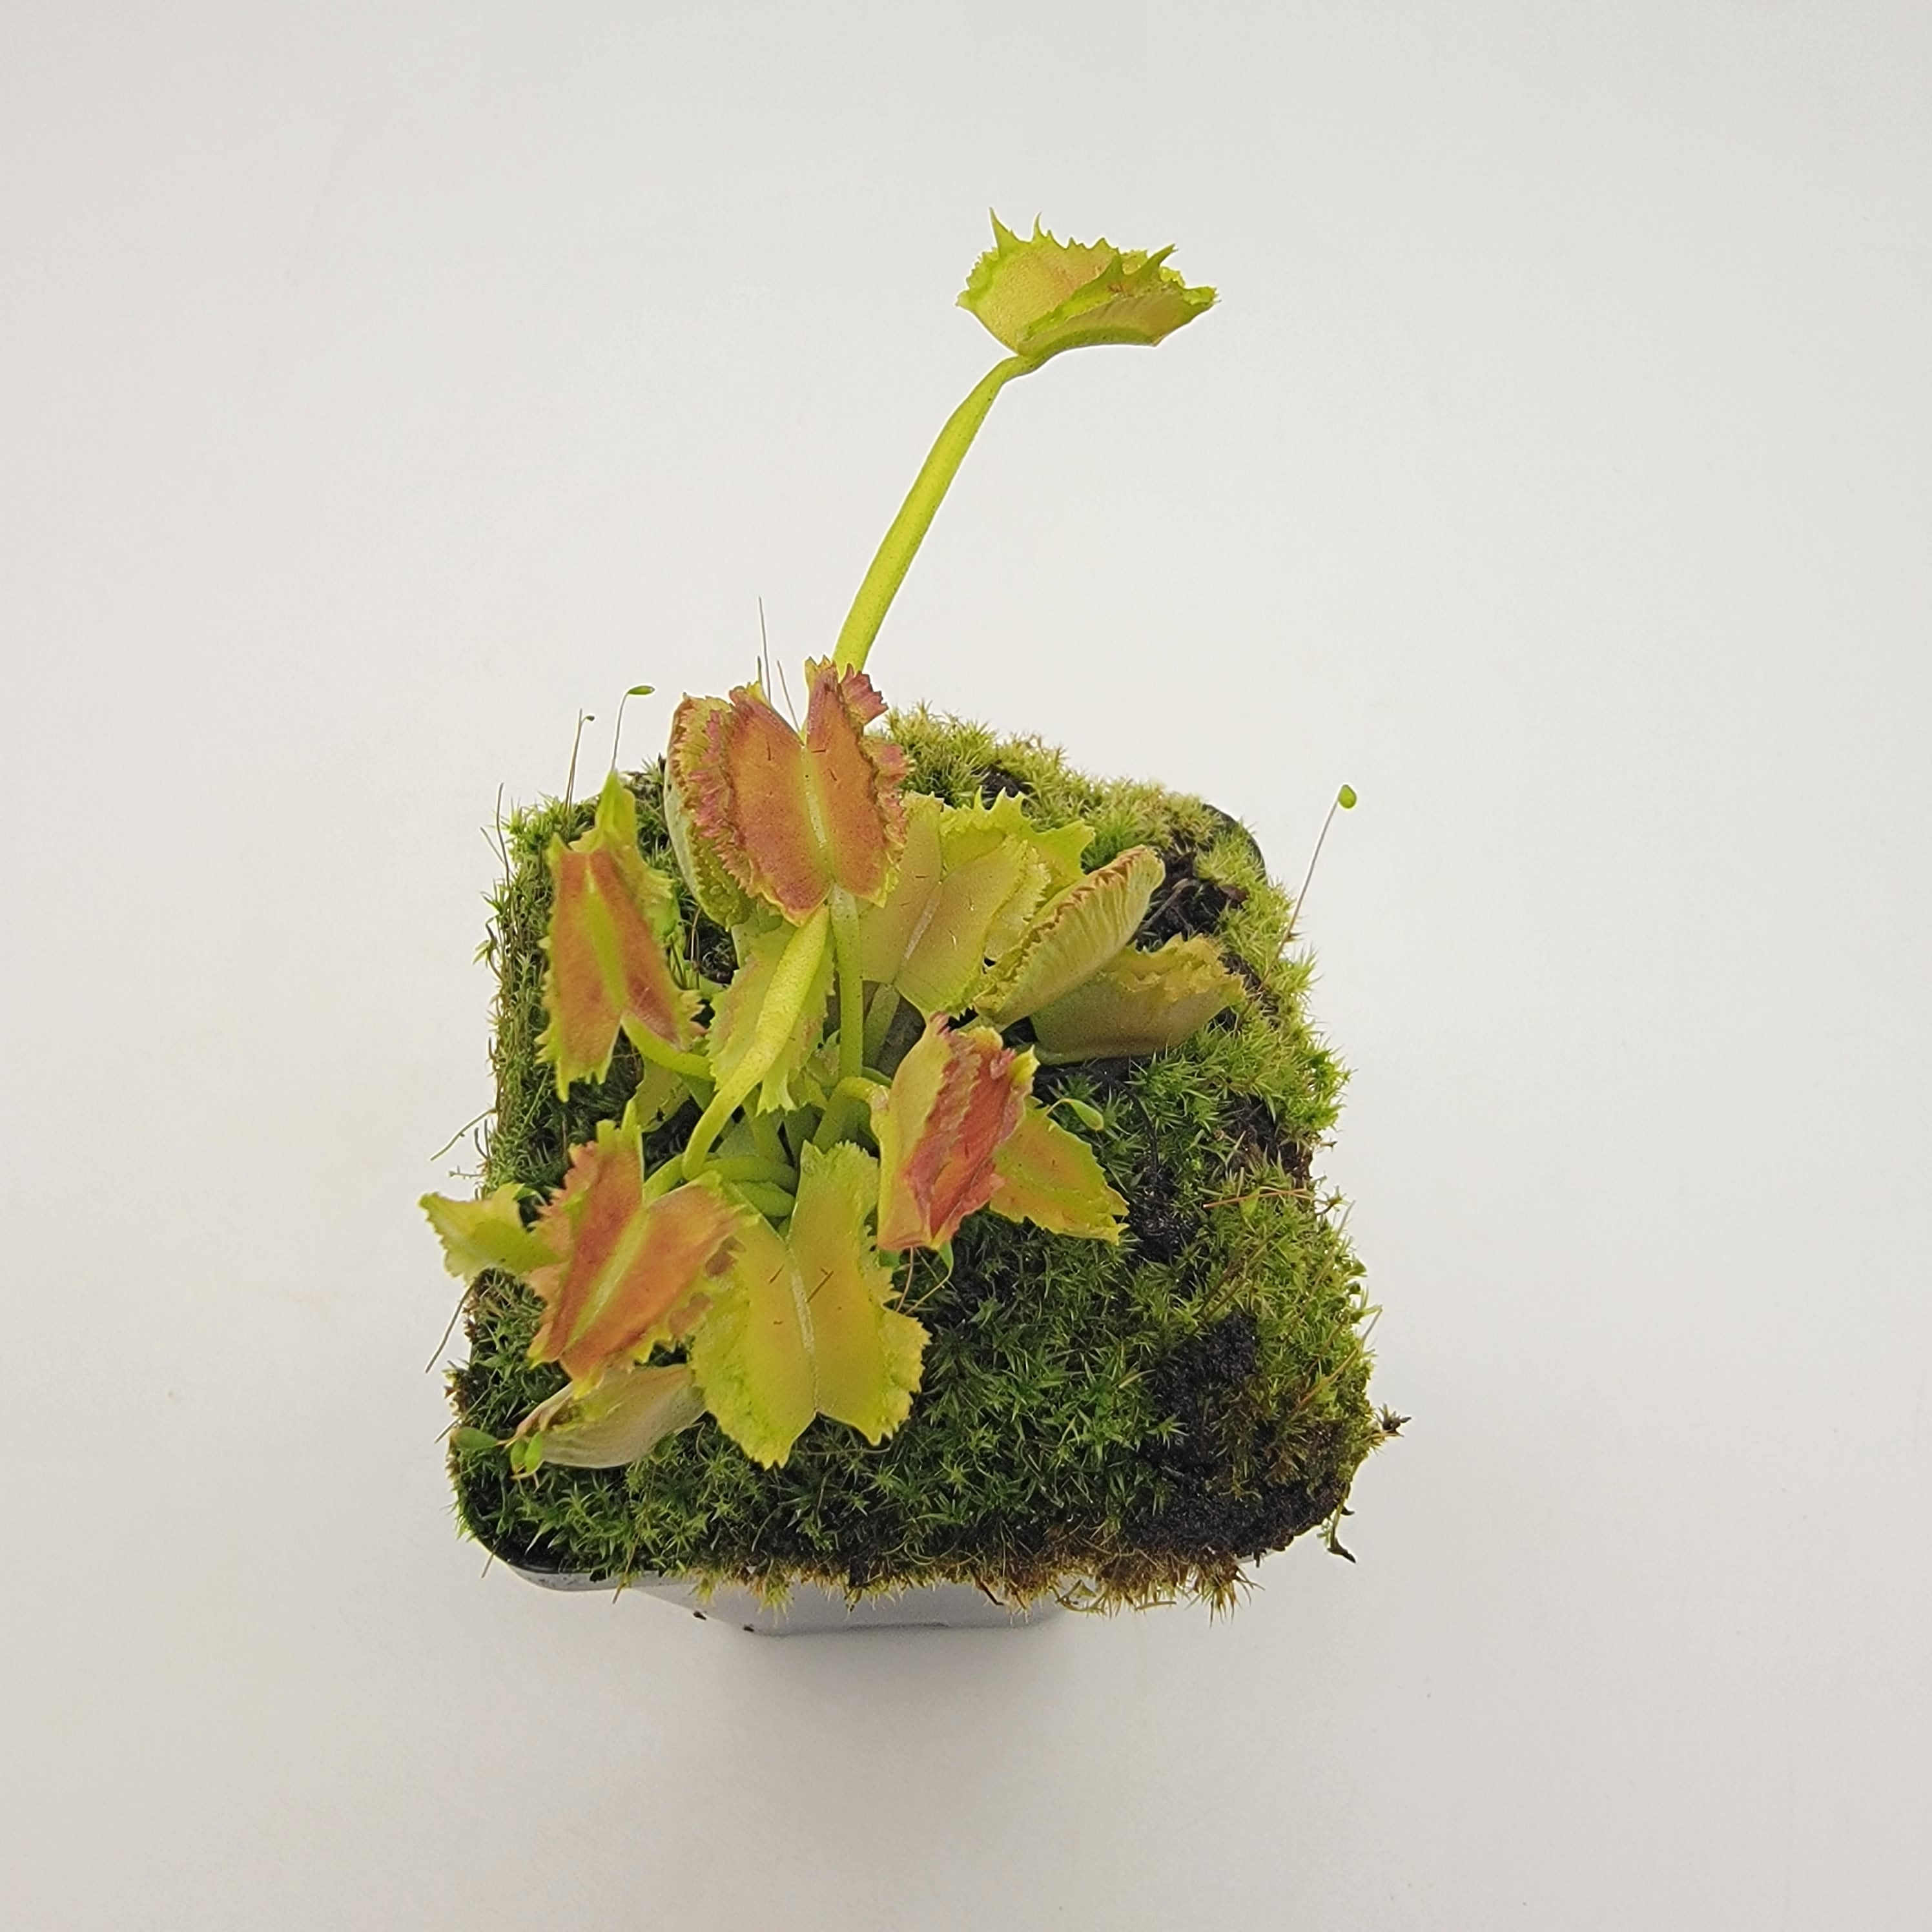 Venus flytrap (Dionaea muscipula) "Biohazard II" - Rainbow Carnivorous Plants LLC